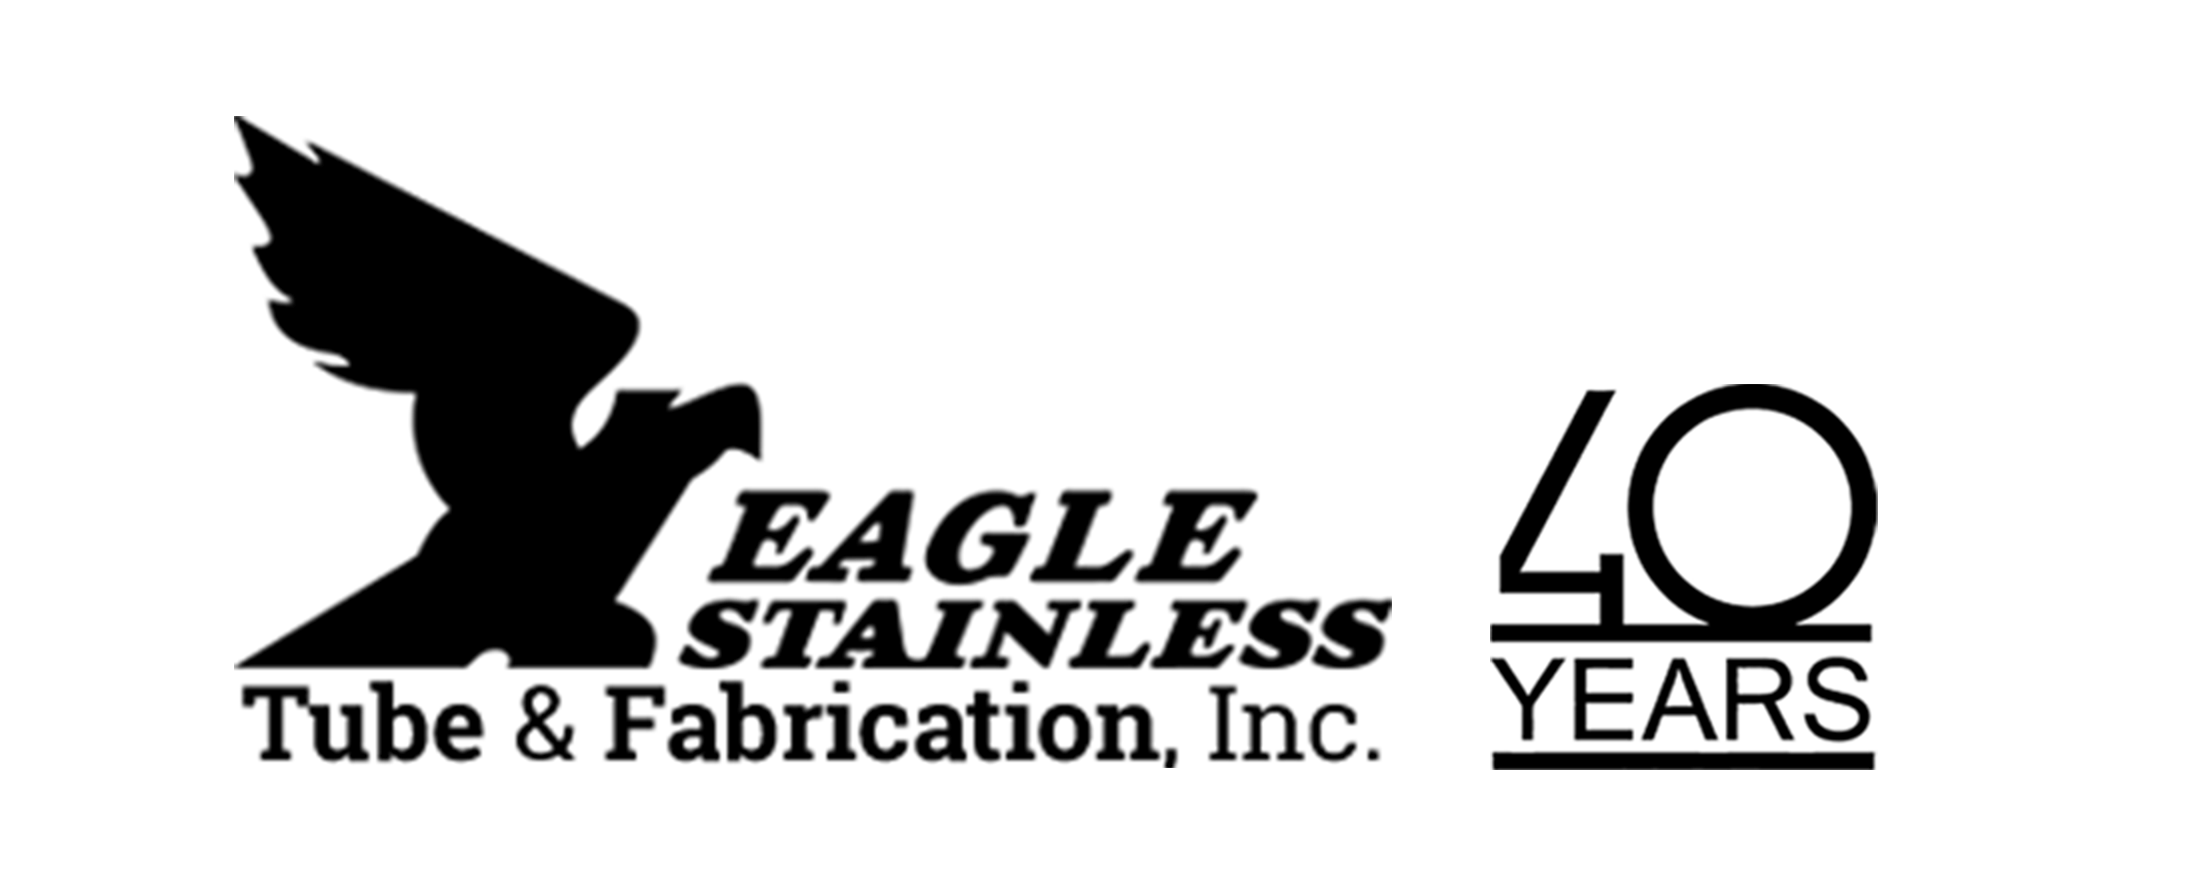 Eagle Stainless Logo